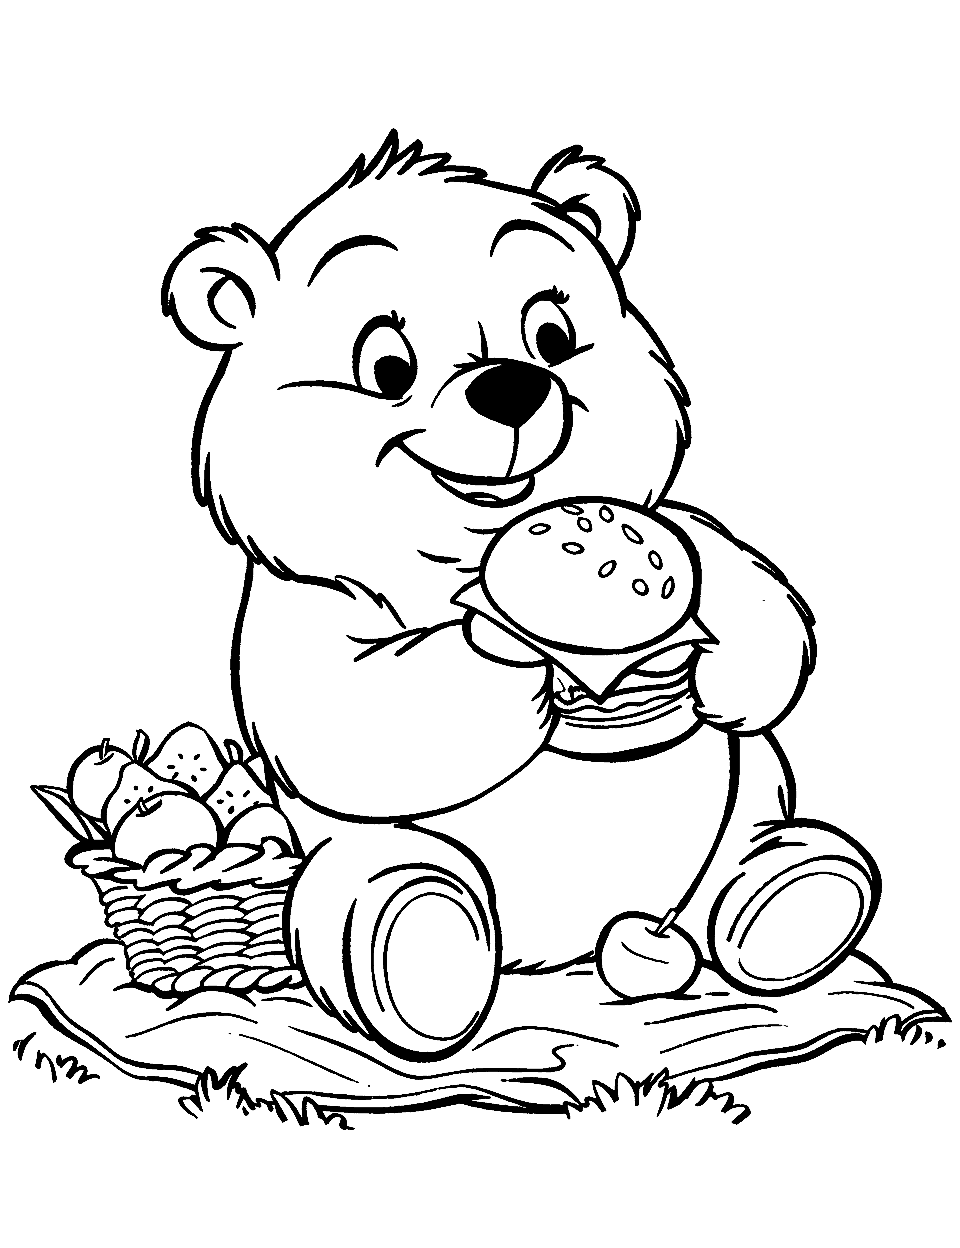 Picnic Teddy Bear Coloring Page - A teddy bear enjoying a picnic with yummy food.